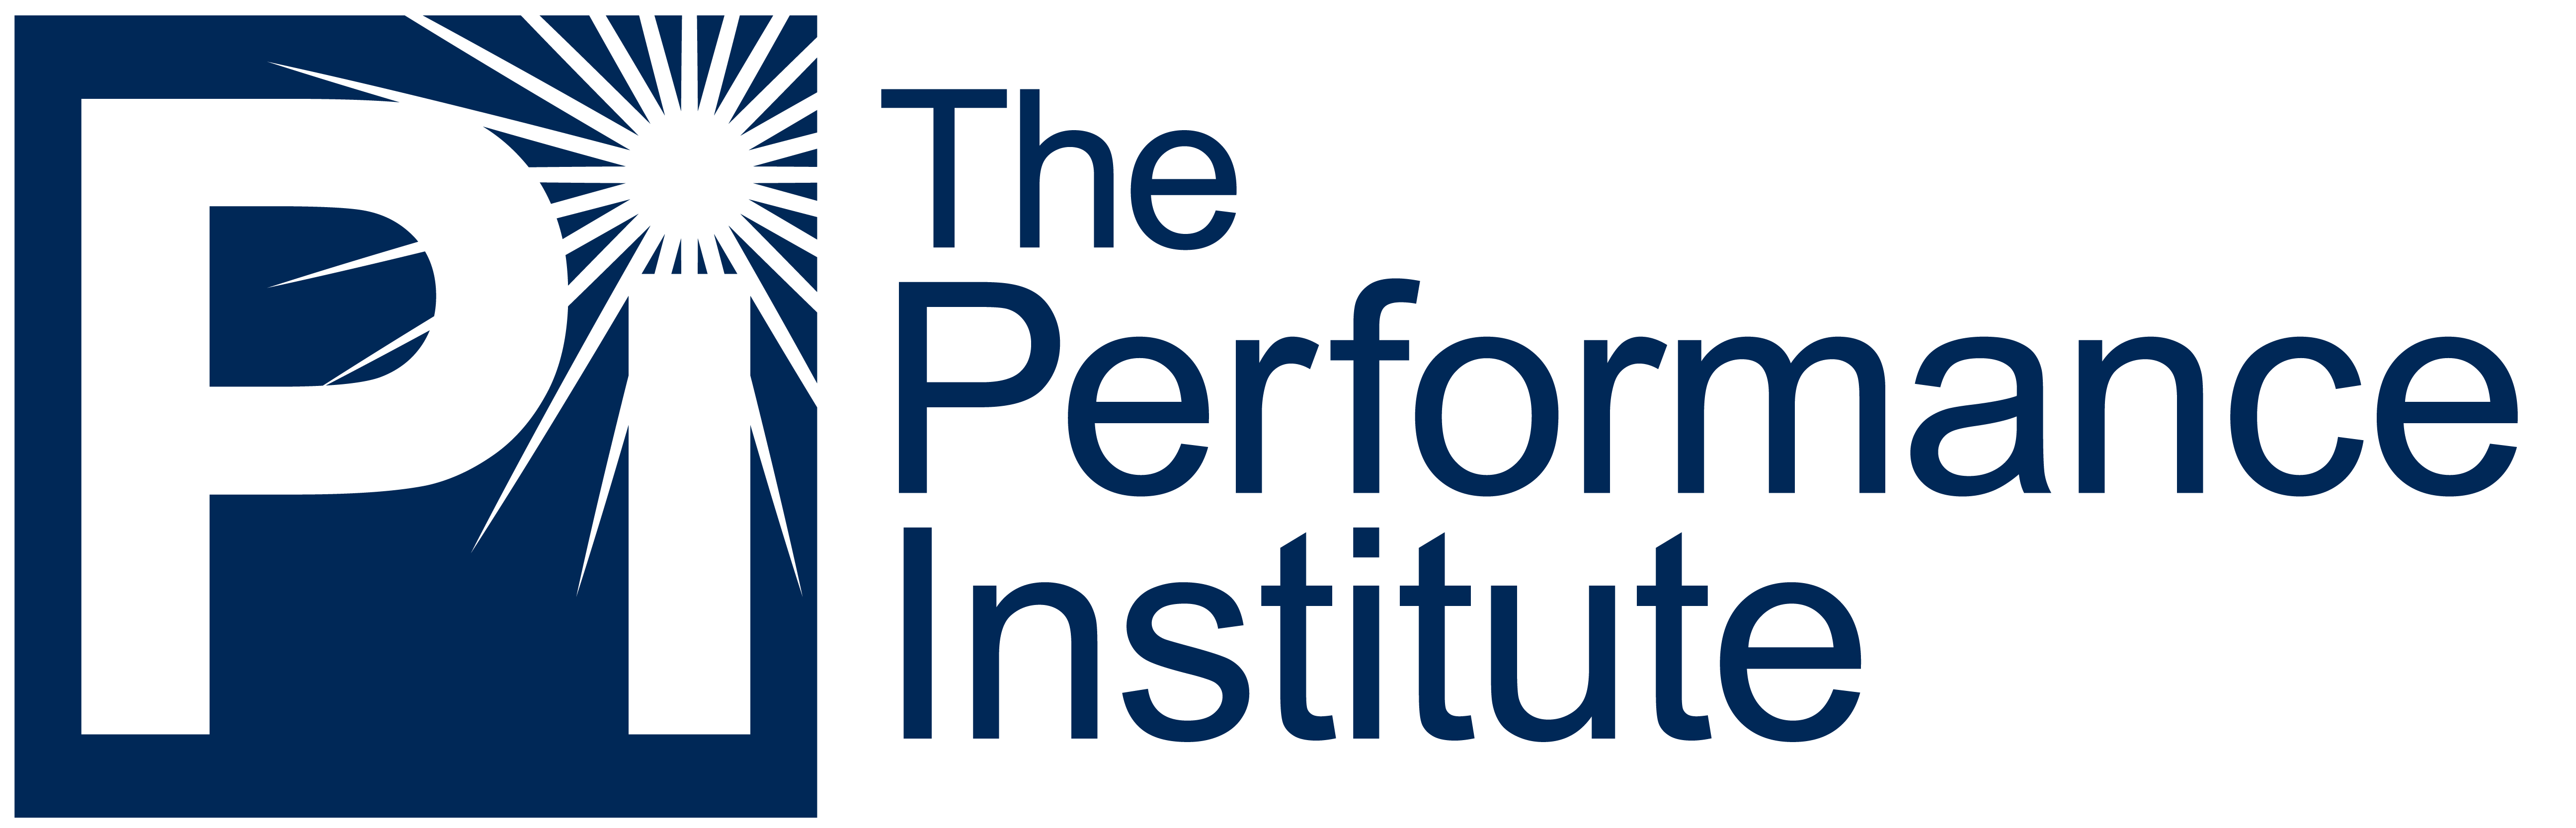 Performance Institute Academy